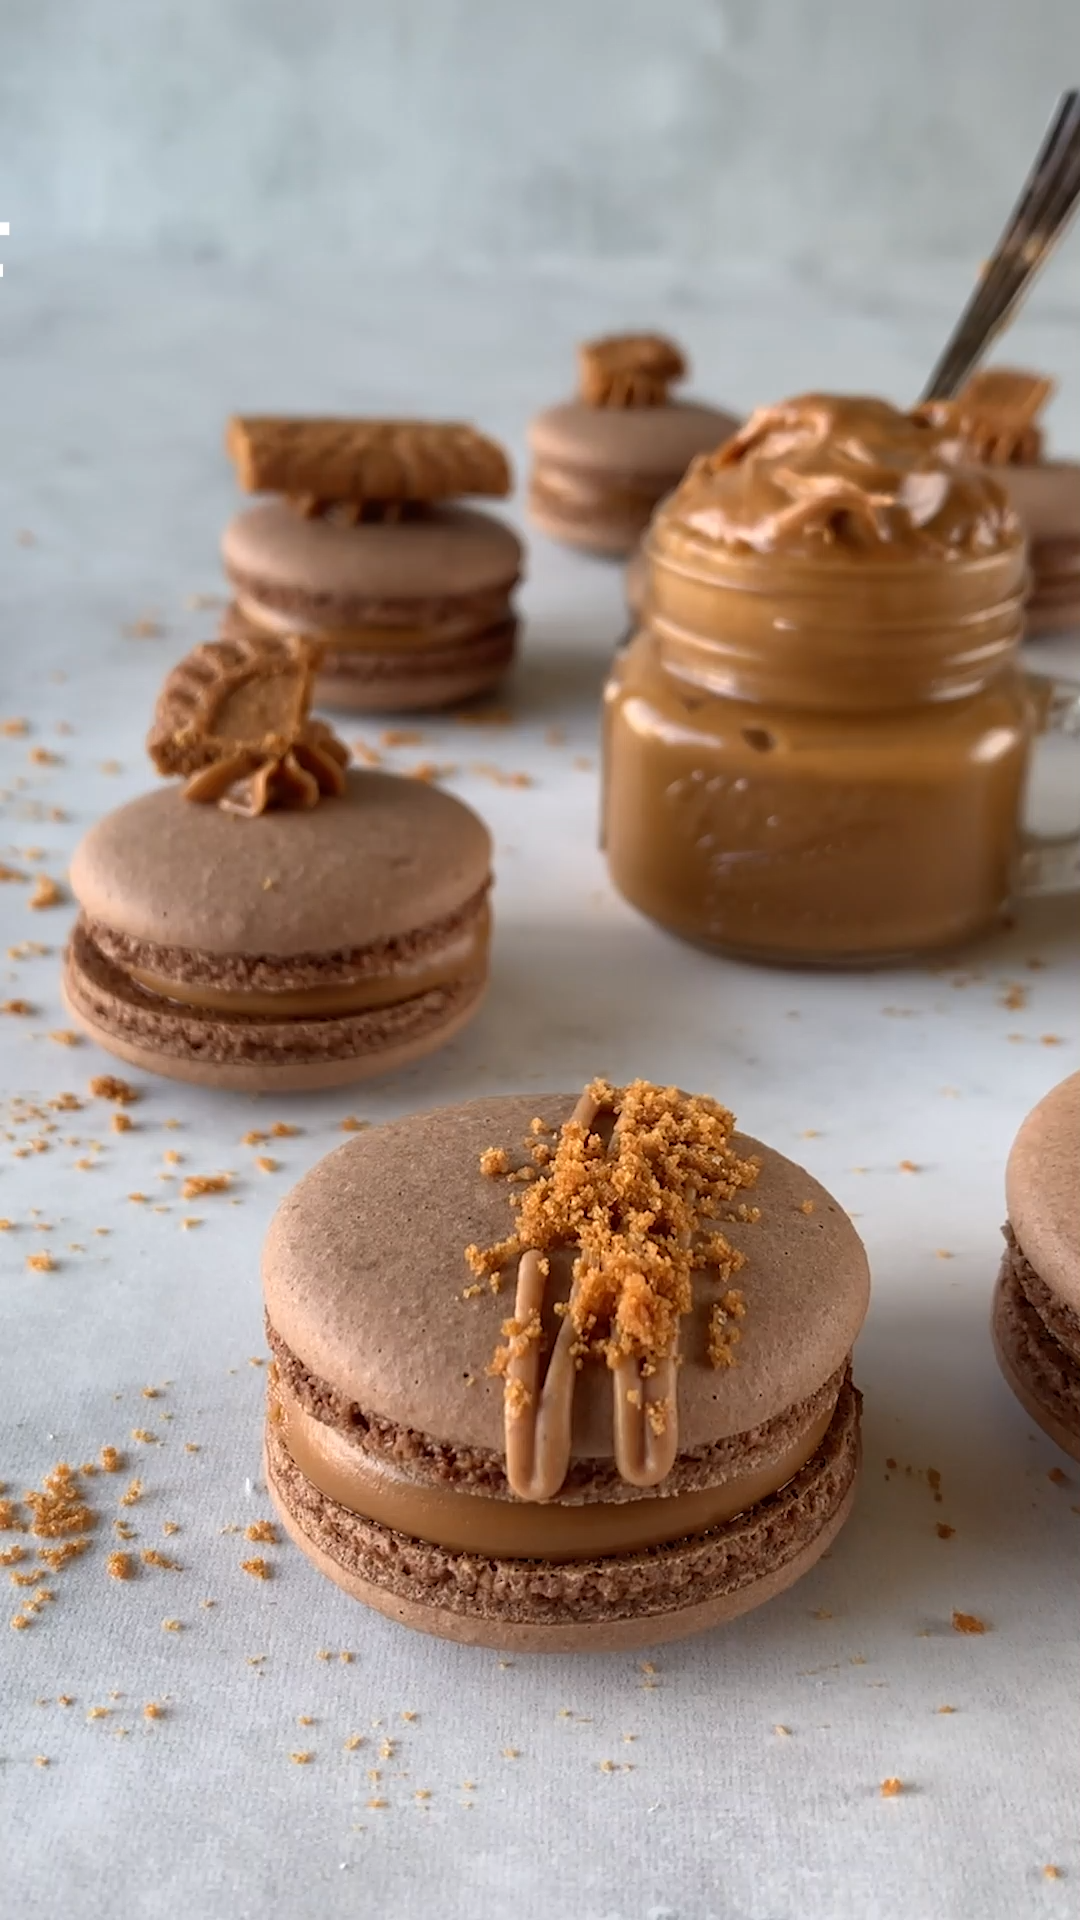 14 desserts French treats ideas